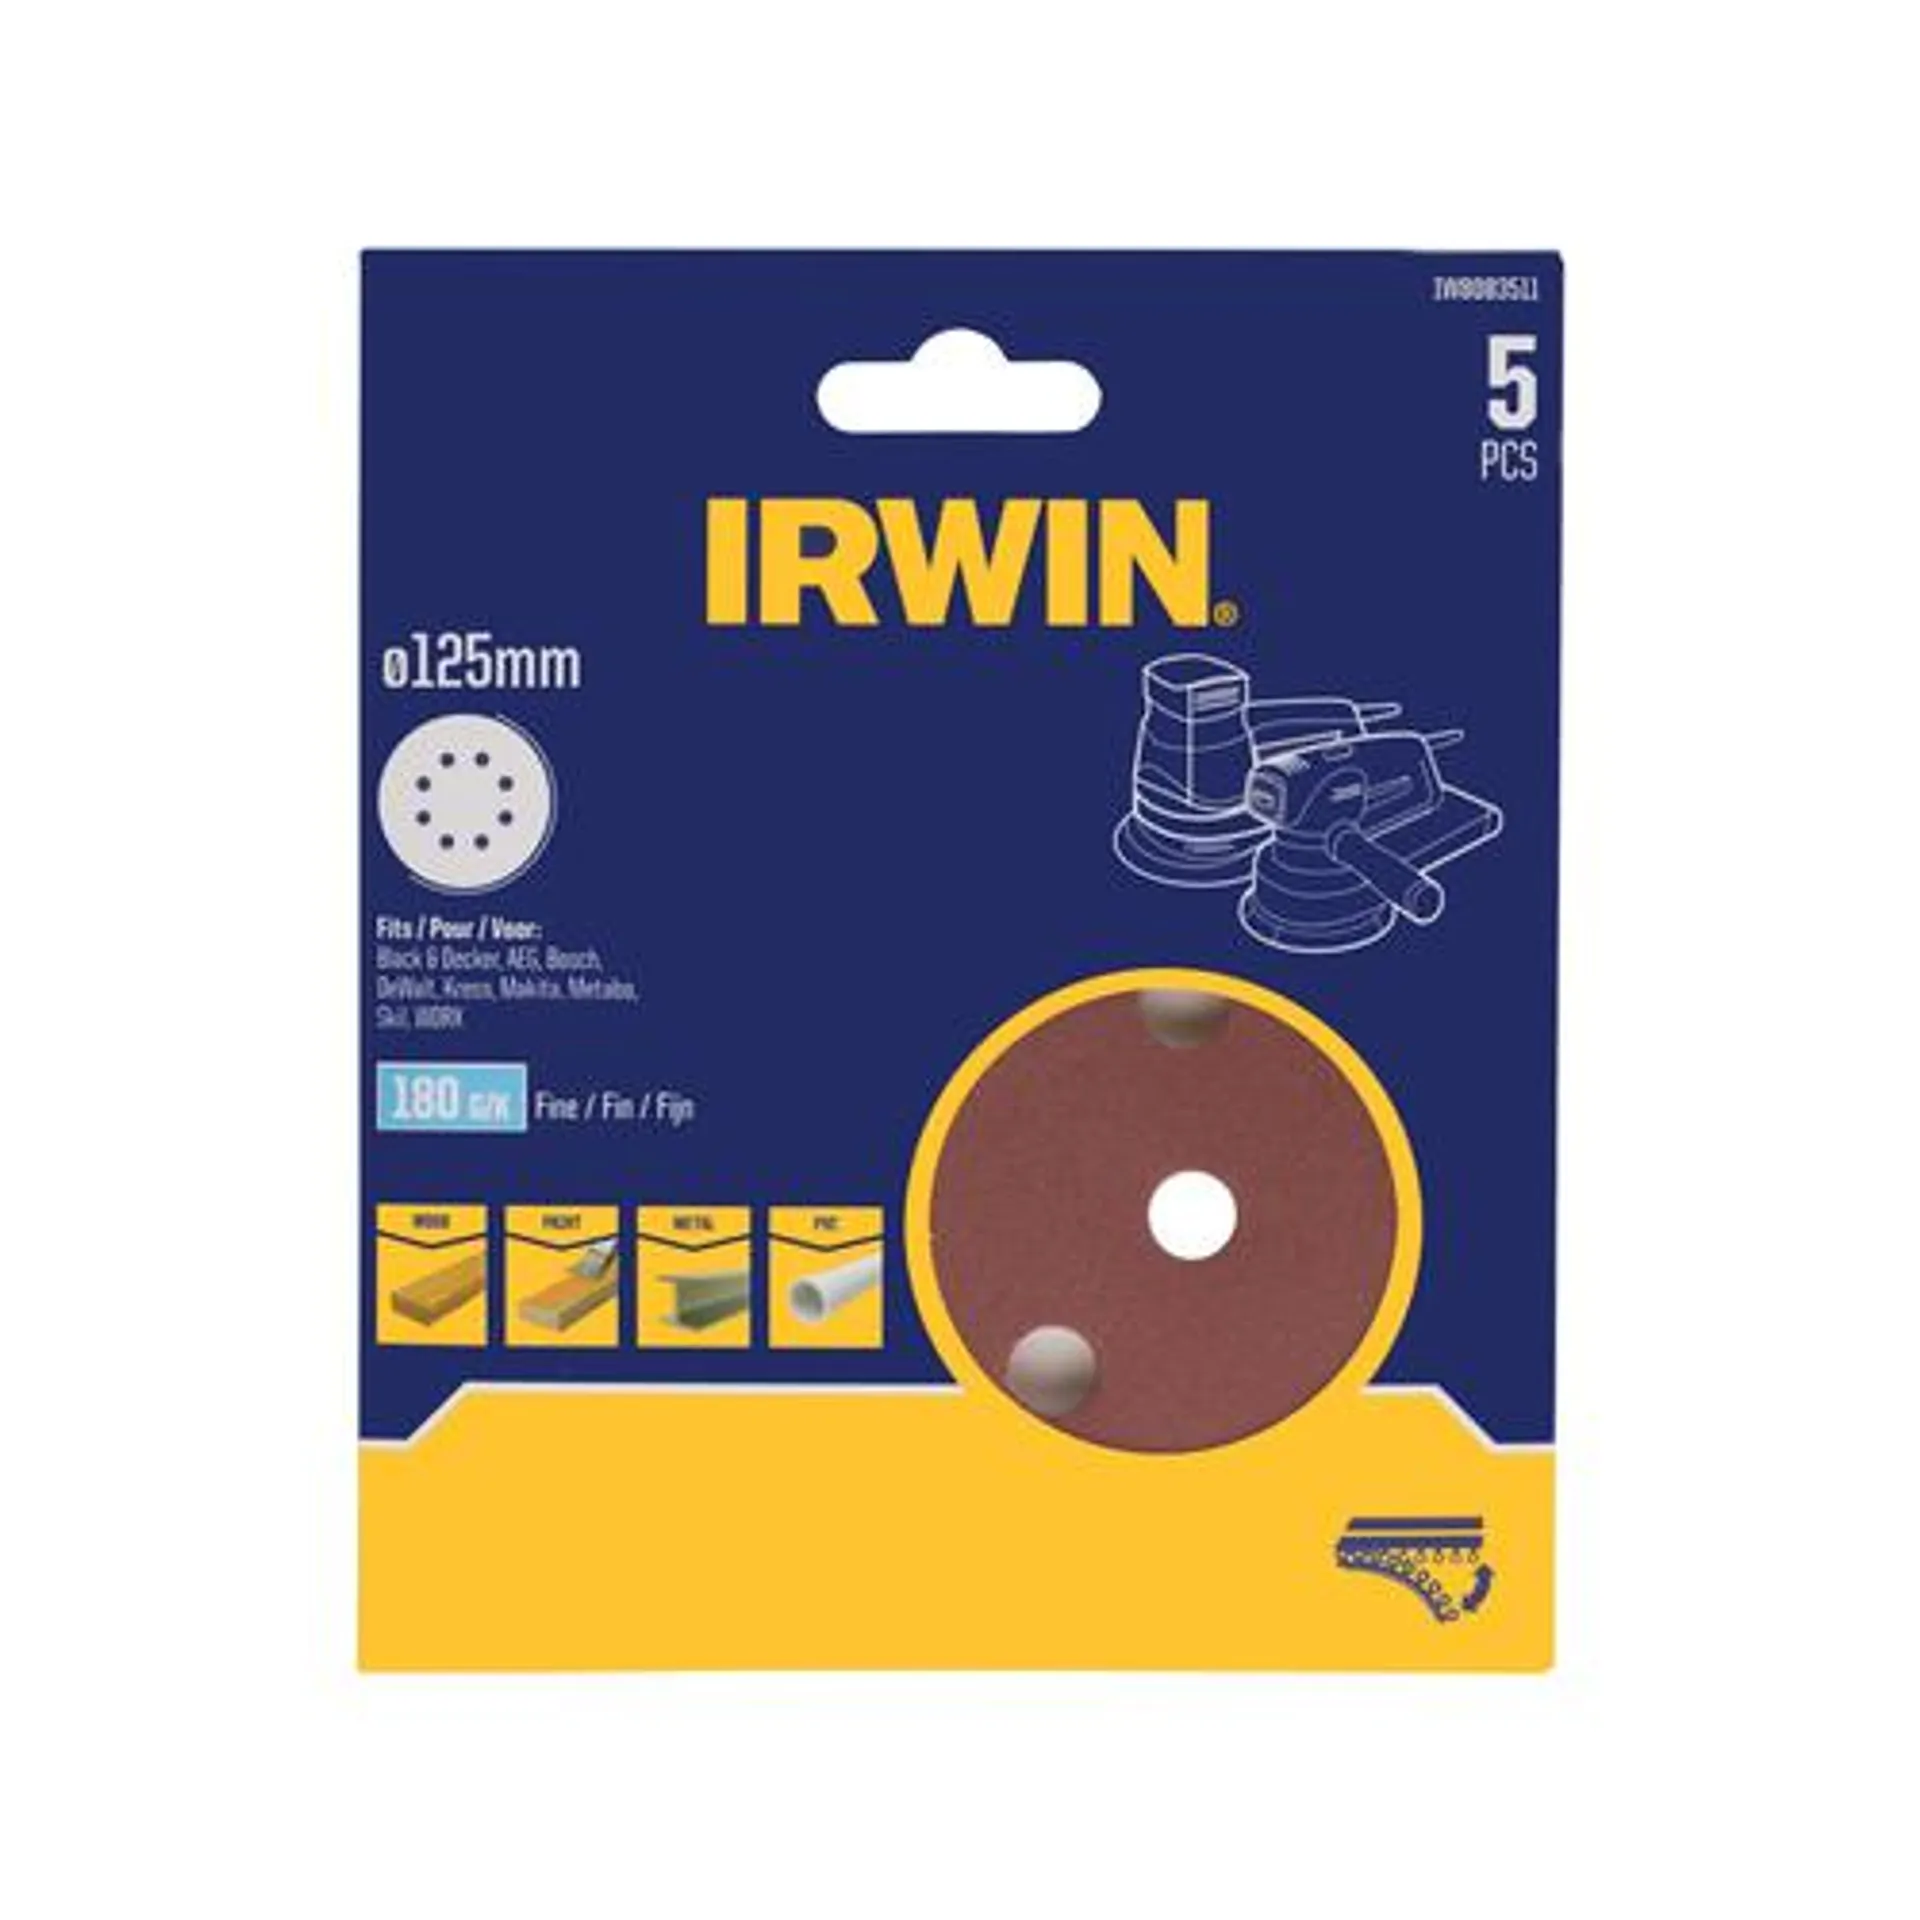 IRWIN 125mm 180 Grit Quick Fit Random Orbital Sanding Discs 8 Holes - 5 Pack